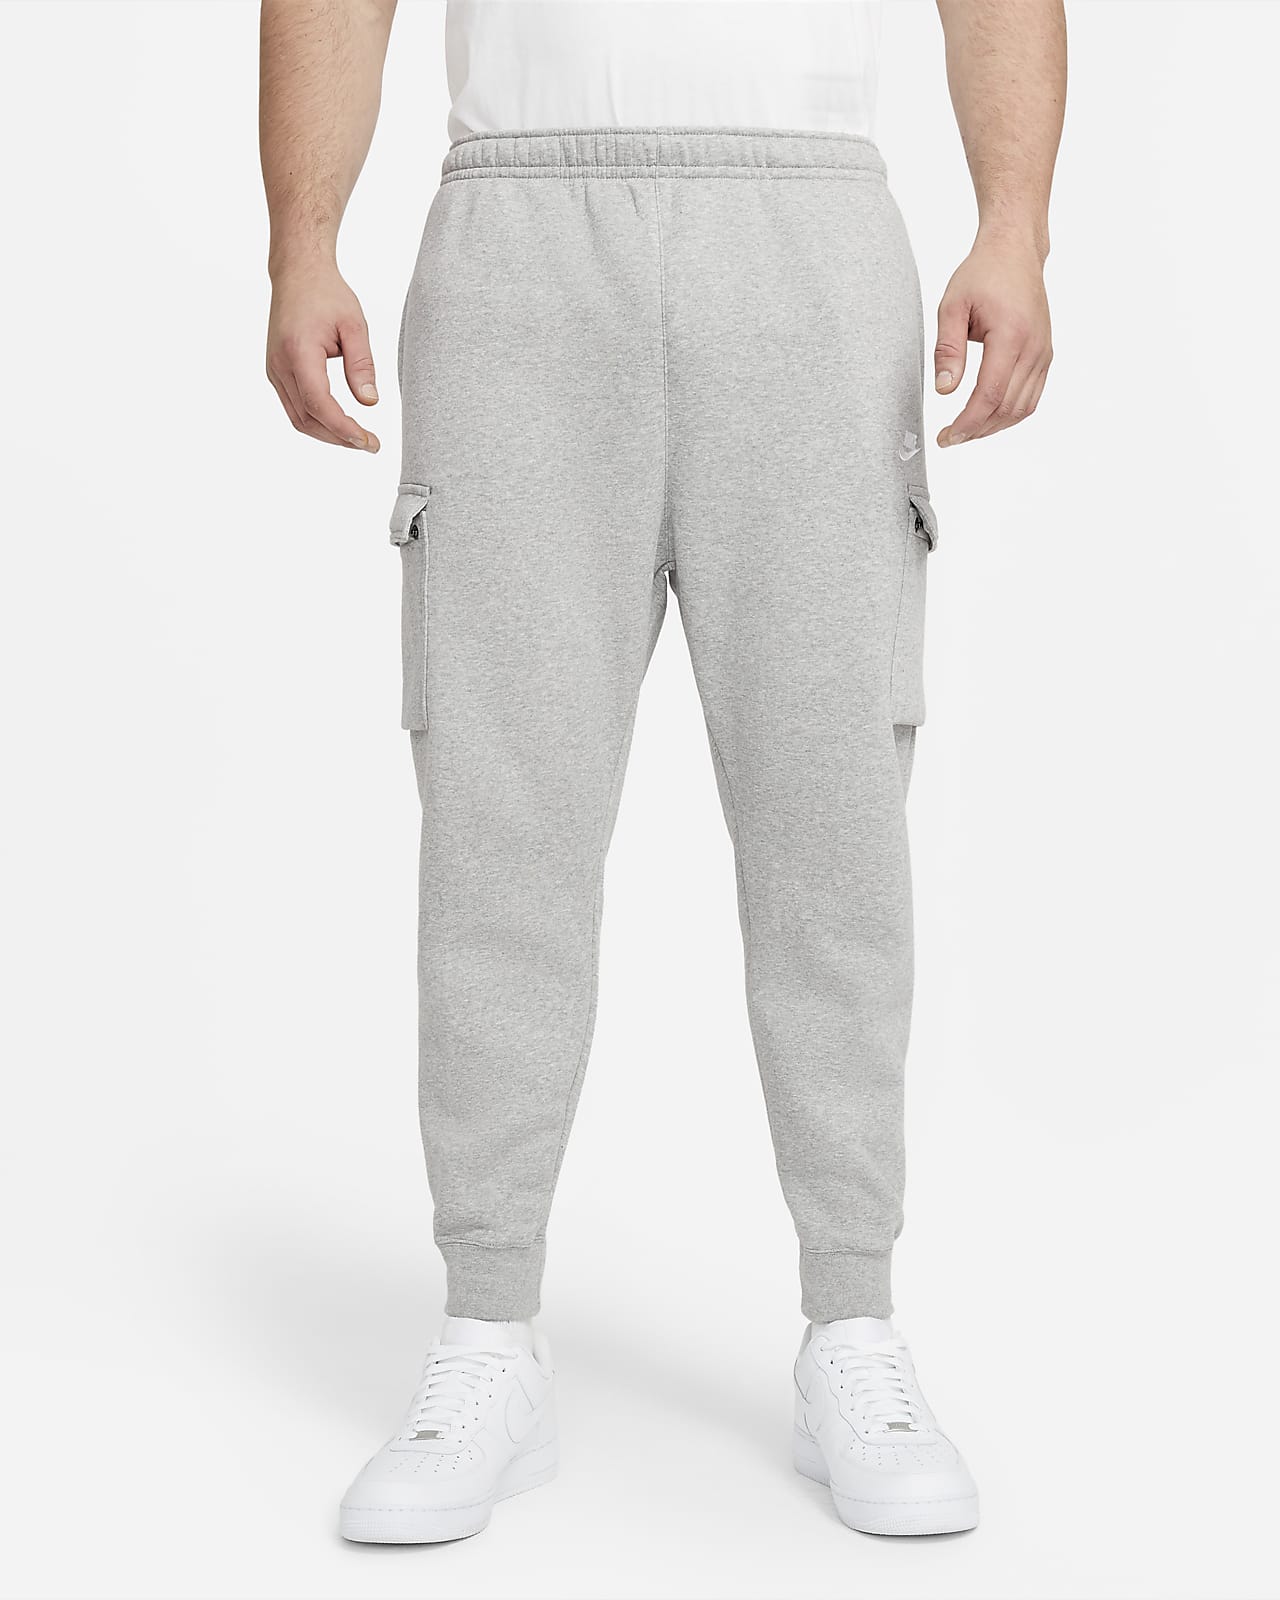 Nike Club Cargo sweatpants in khaki